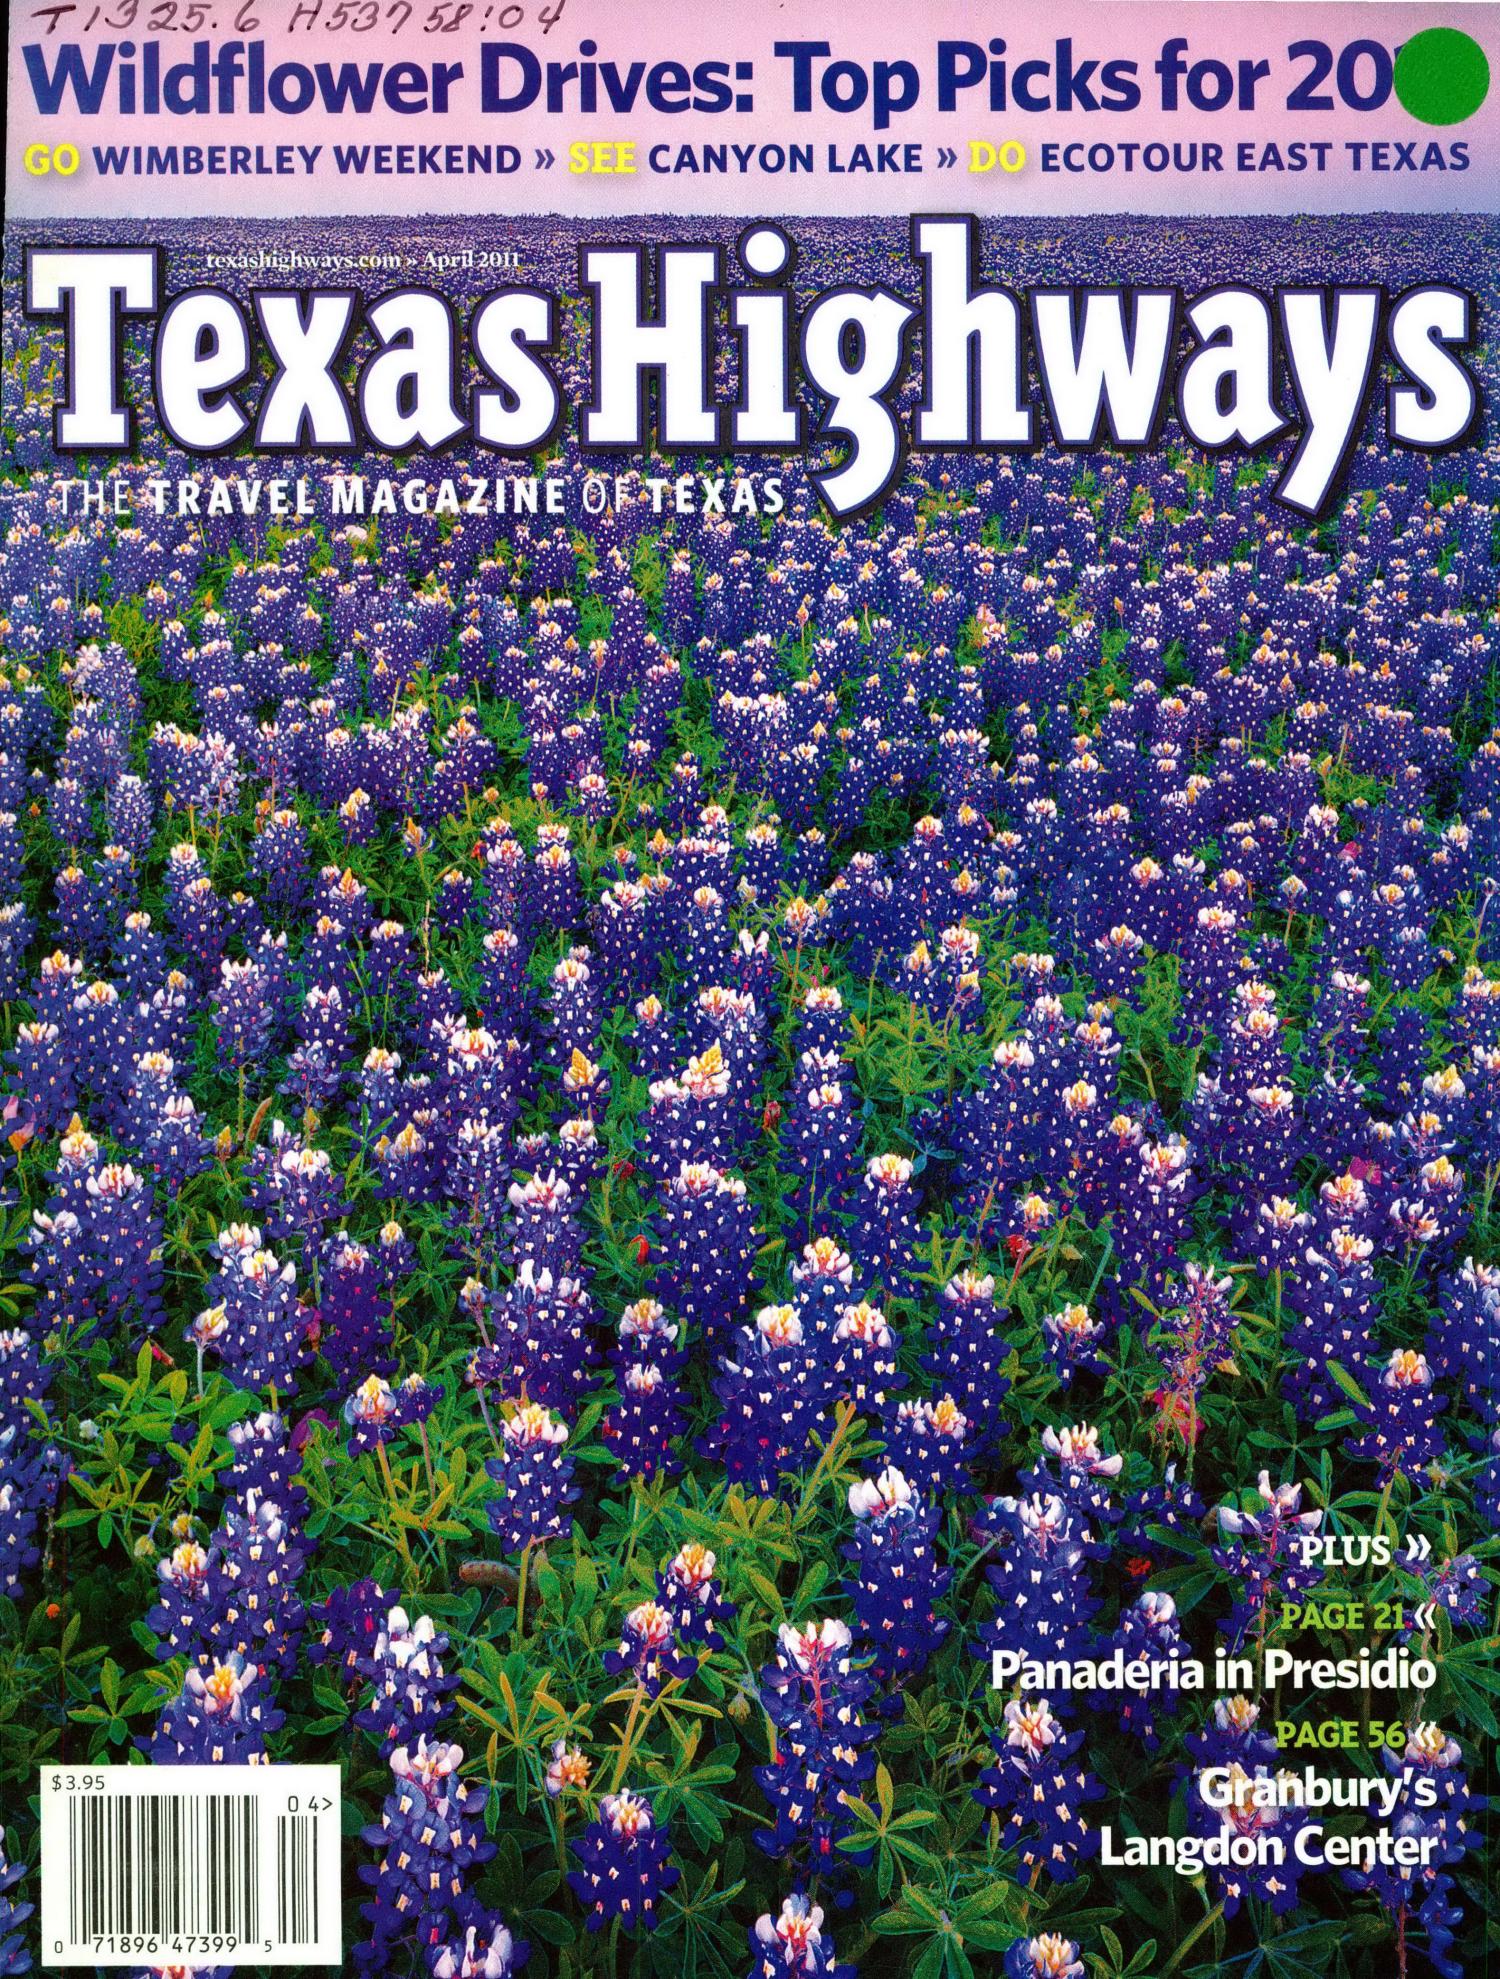 Texas Highways, Volume 58, Number 4, April 2011
                                                
                                                    Texas Highways Magazine
                                                